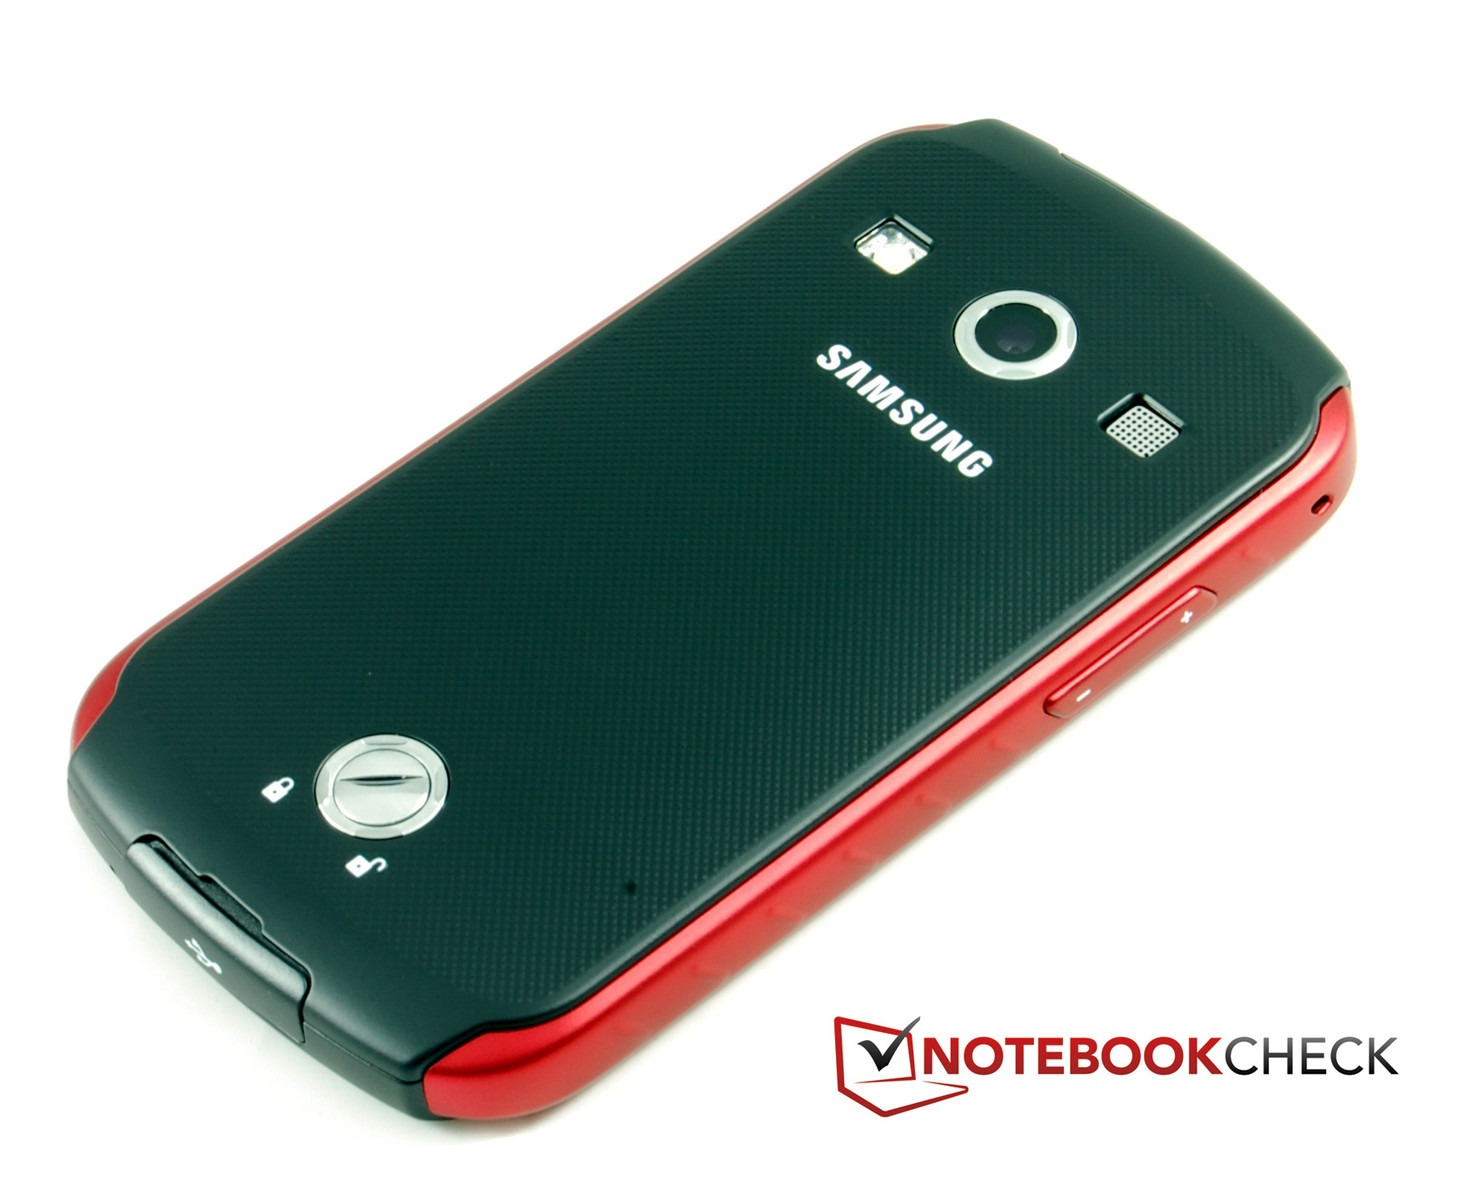 cuchara Lágrimas Limón Review Samsung Galaxy Xcover 2 GT-S7710 Smartphone - NotebookCheck.net  Reviews